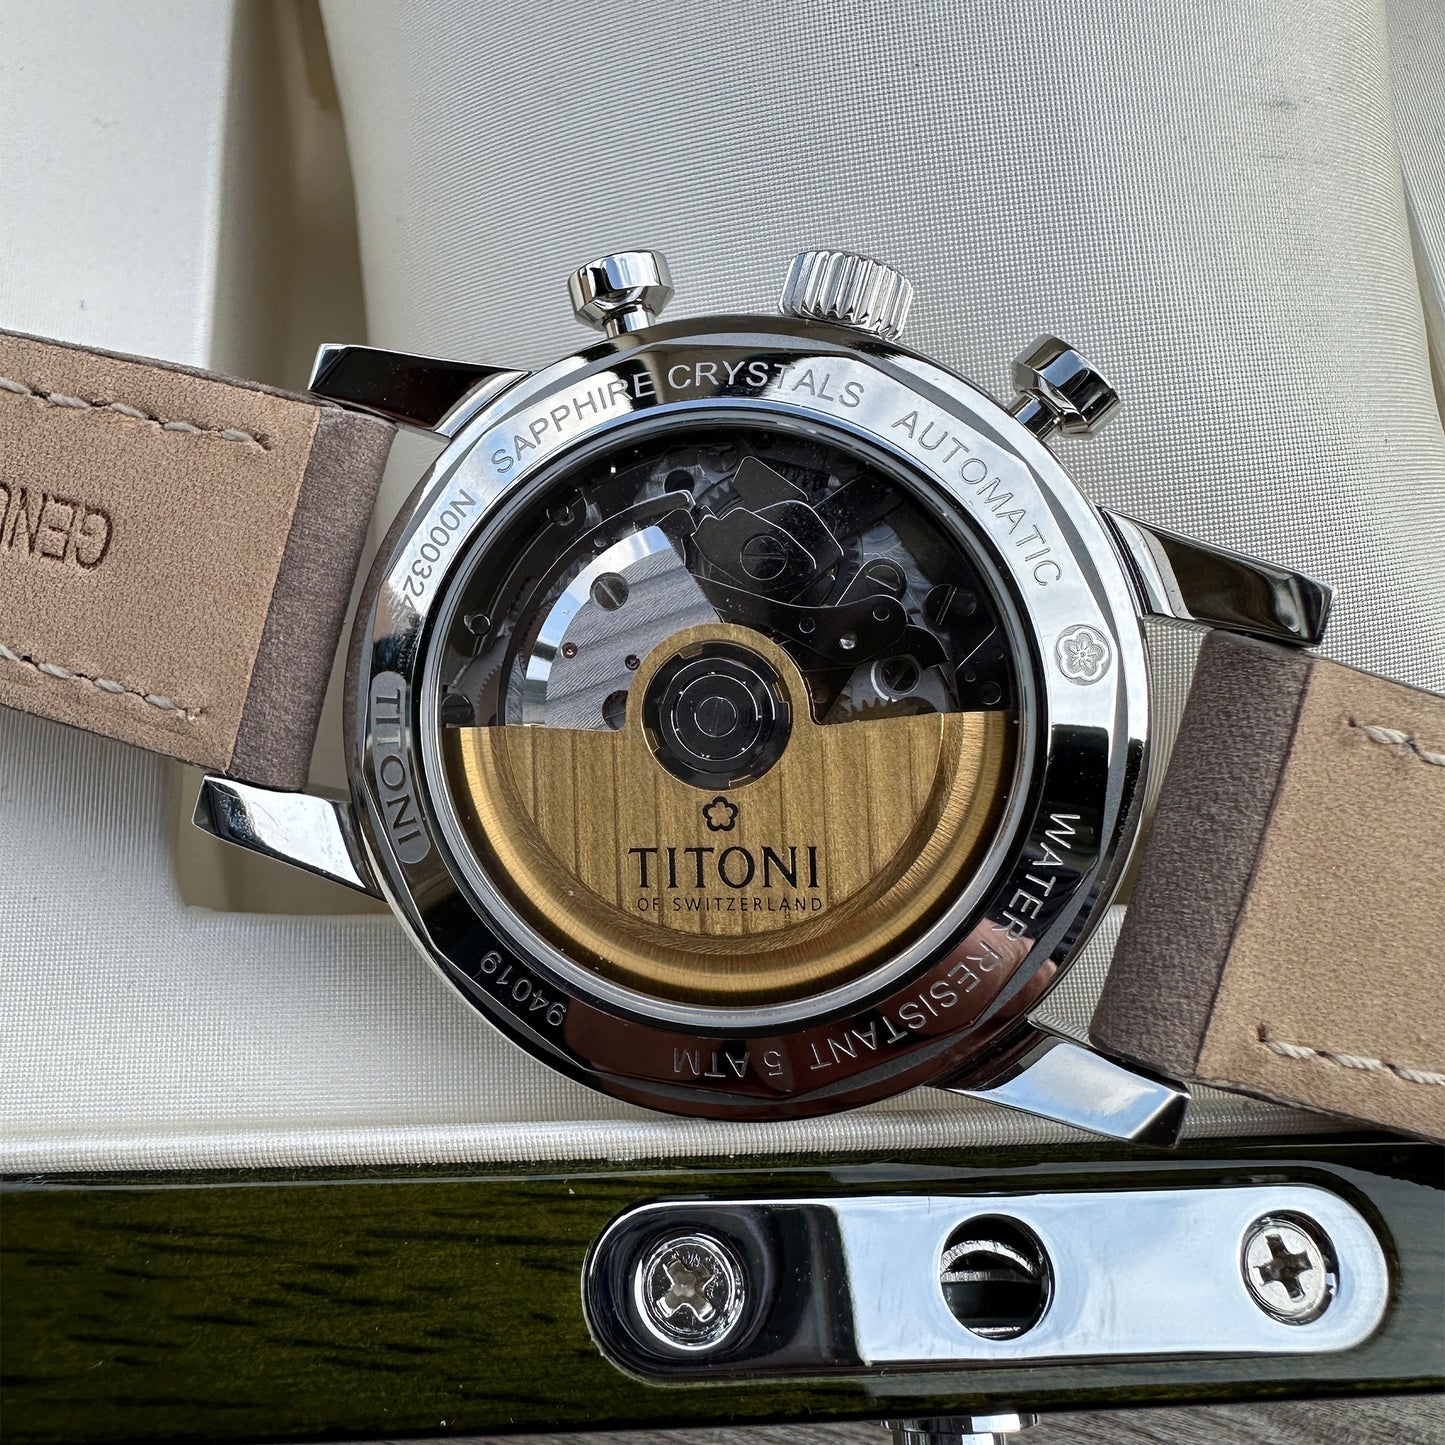 TITONI Heritage Modell 94019 S-ST-682 gebraucht